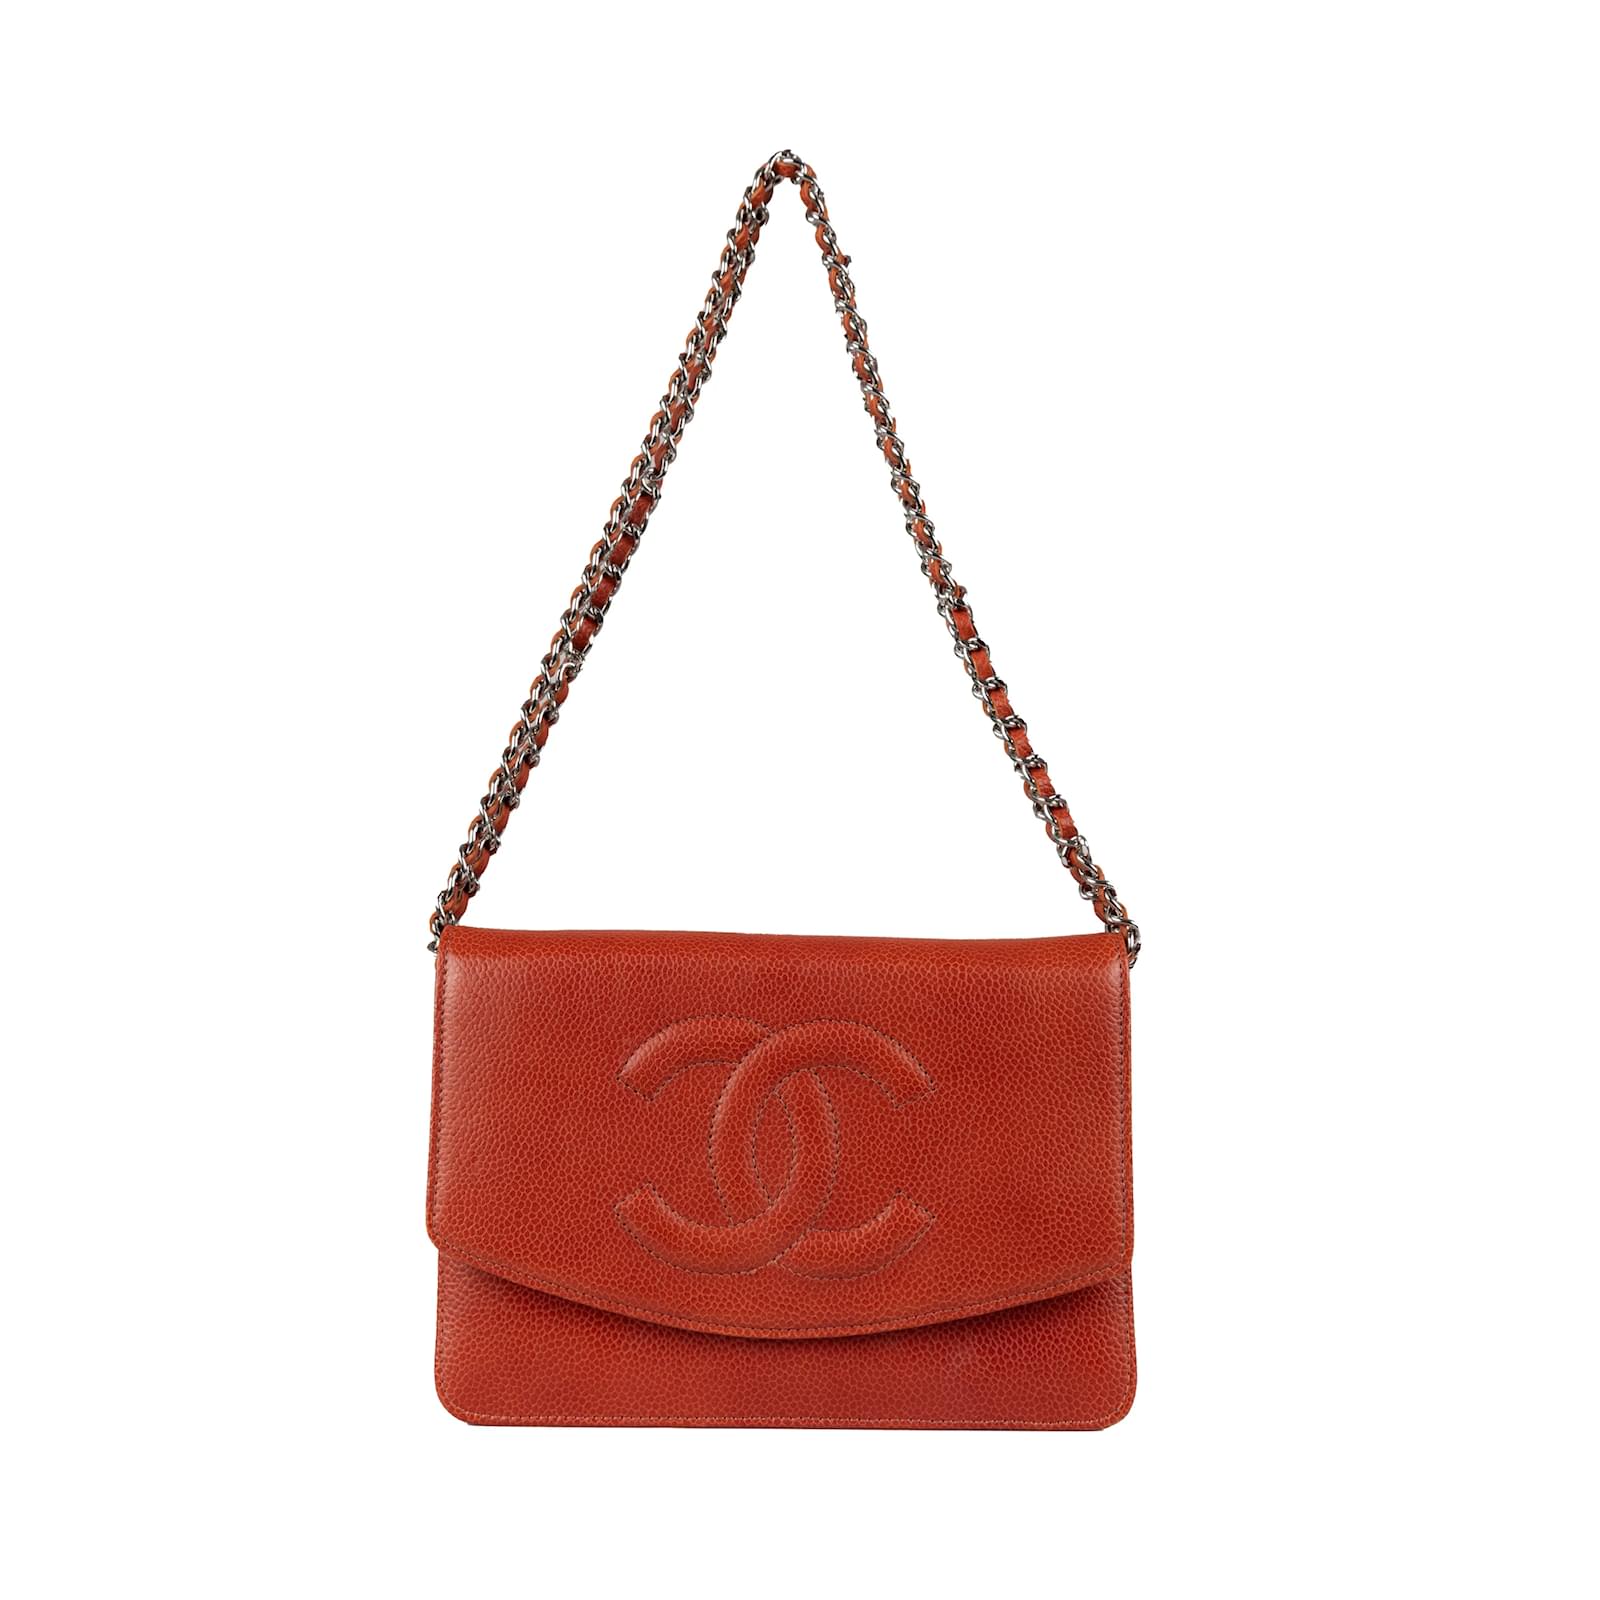 Handbags Chanel Chanel Caviar Timeless Wallet on Chain